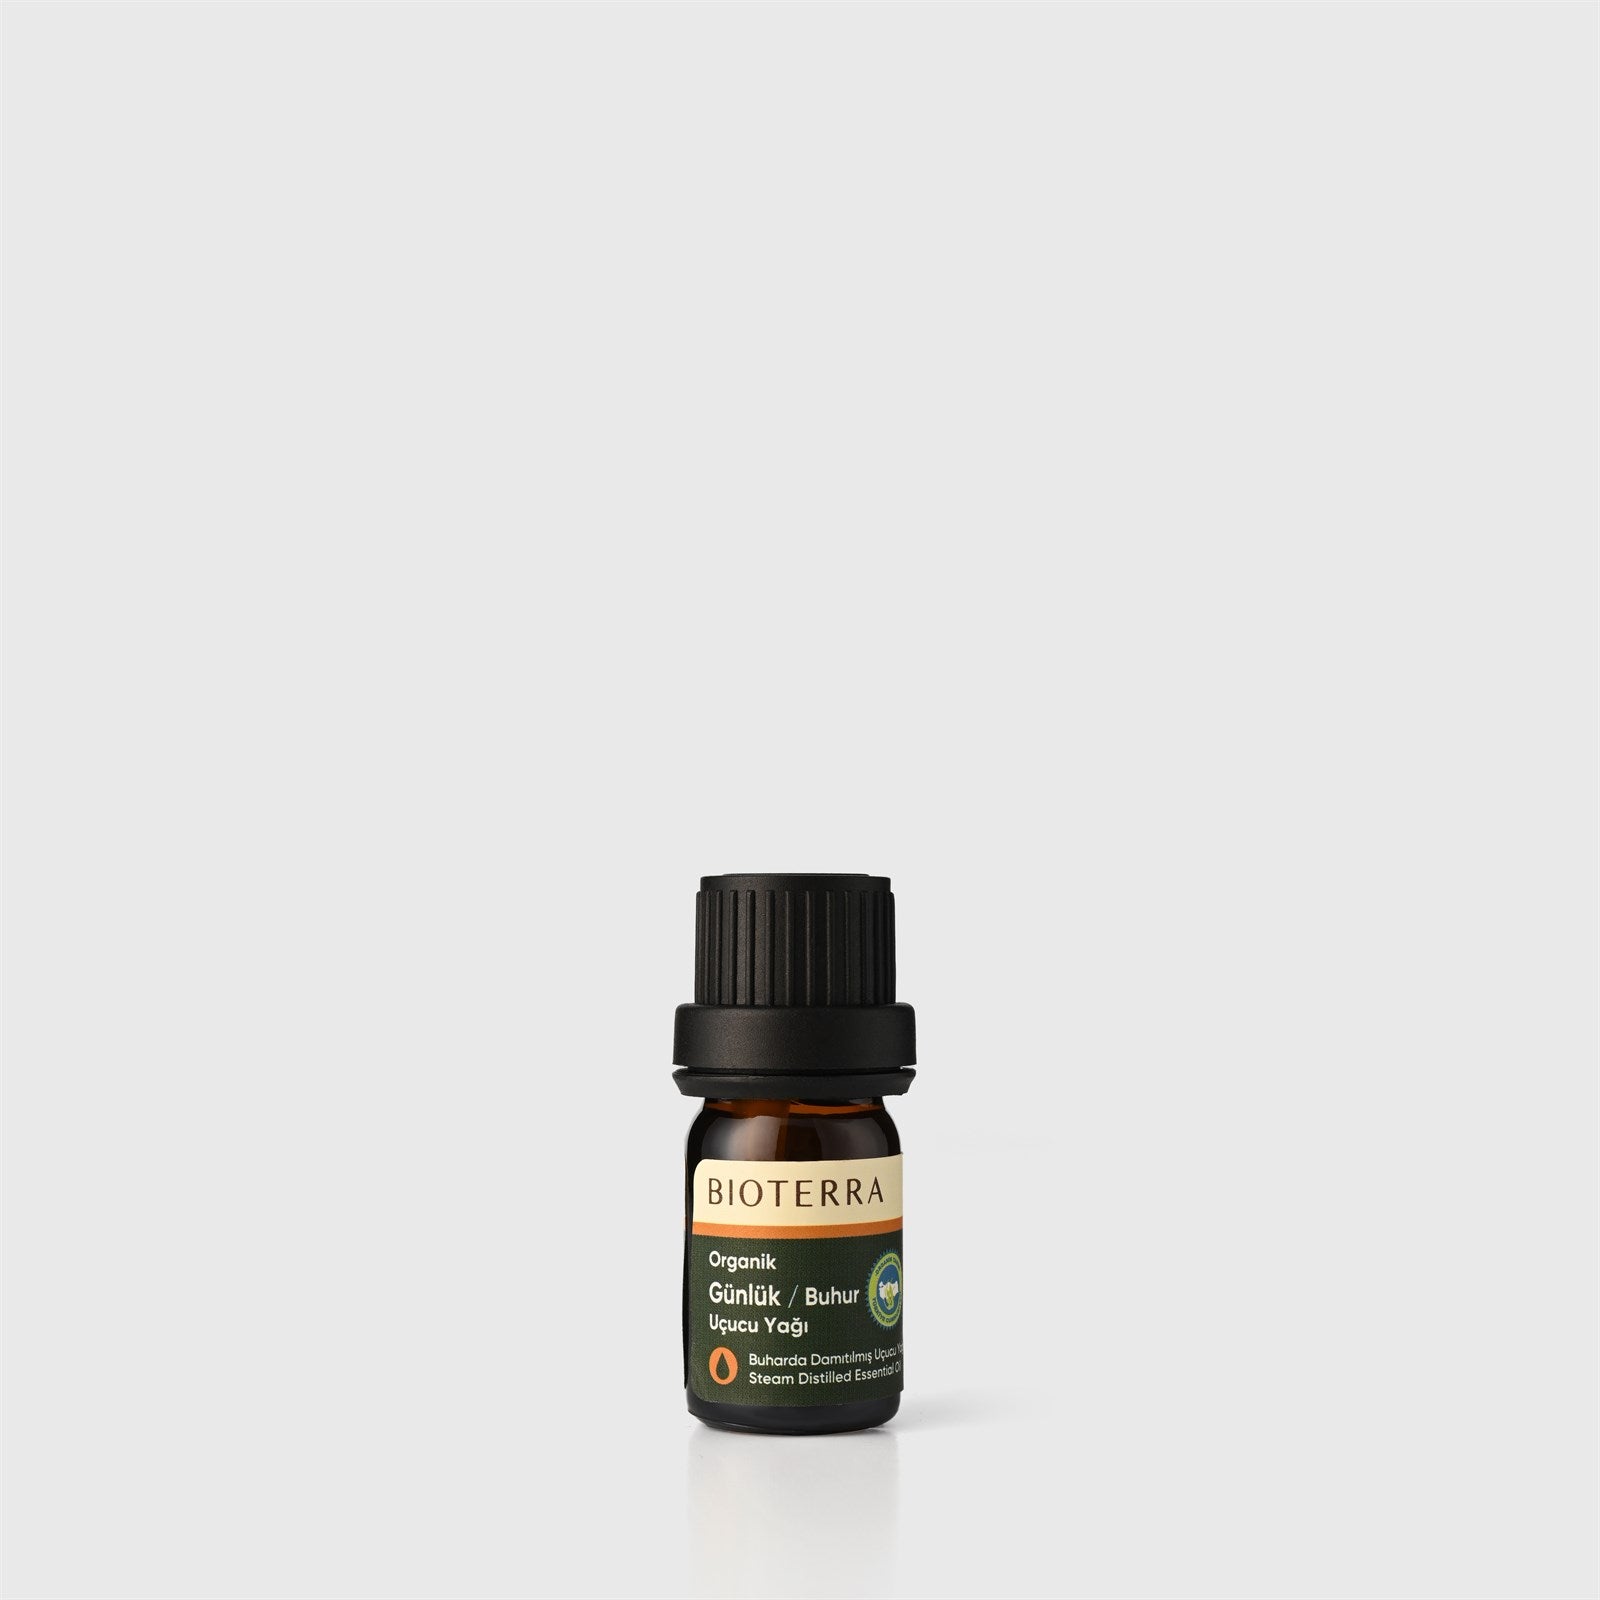 Bioterra Organic frankincense essential oil 5 ml